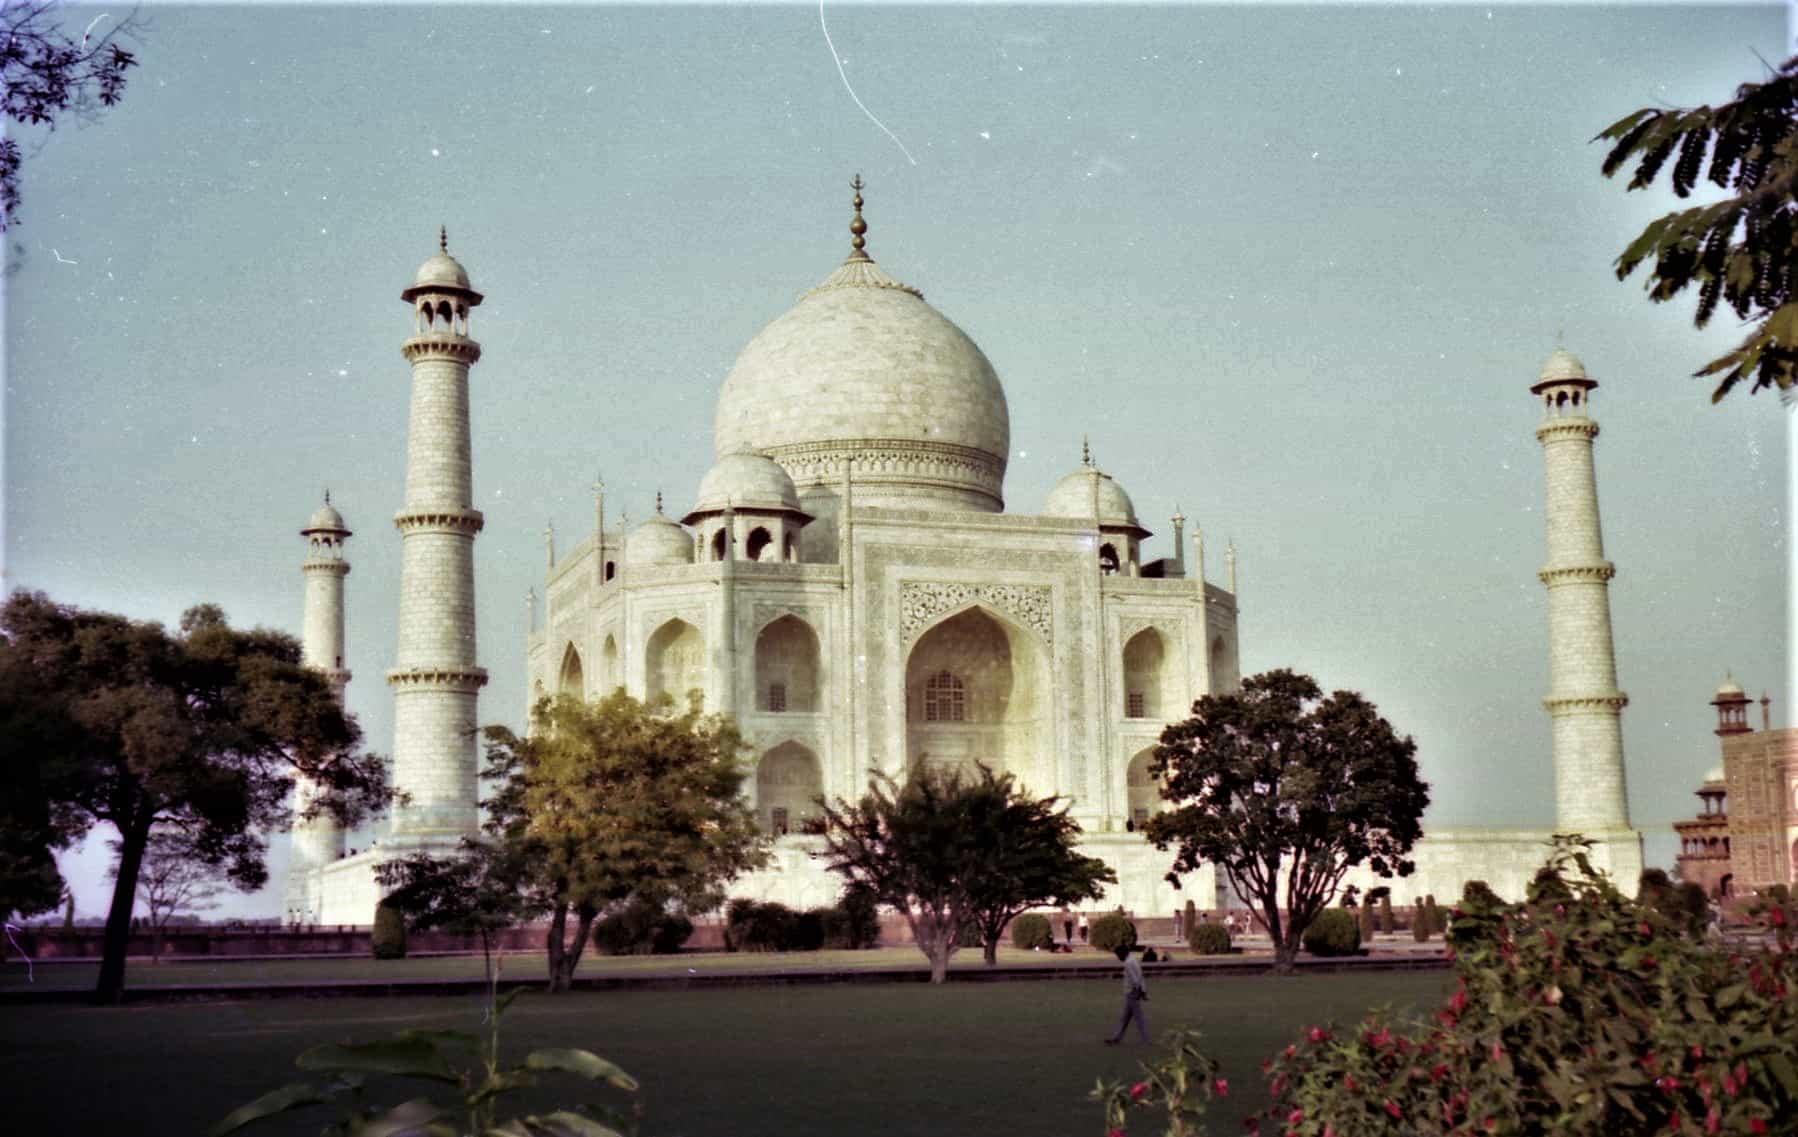 Taj Mahal - few tourists at that time